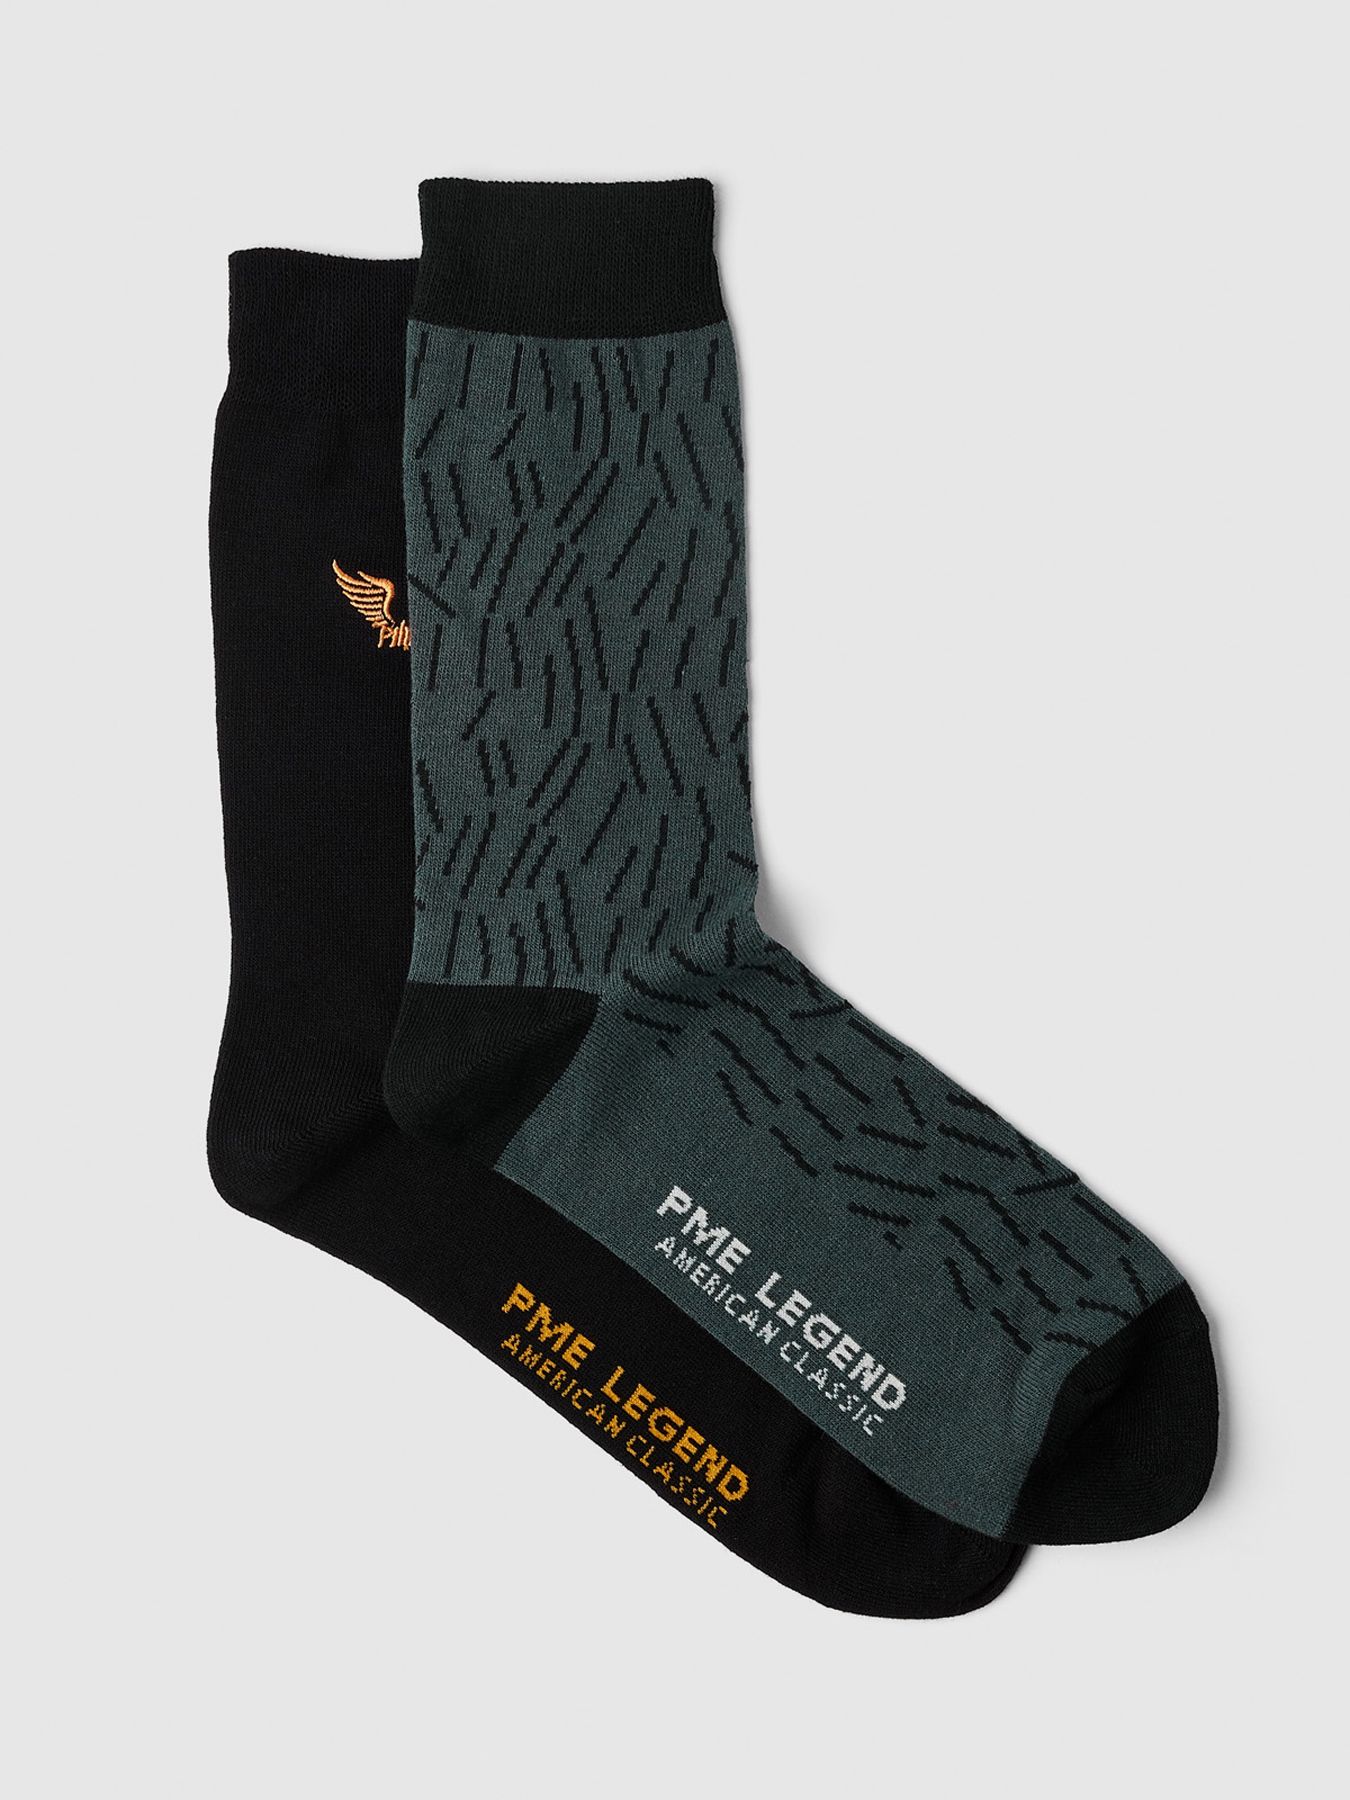 Pme Legend Socks Cotton blend socks 2-pack Urban Chic 00105123-6026